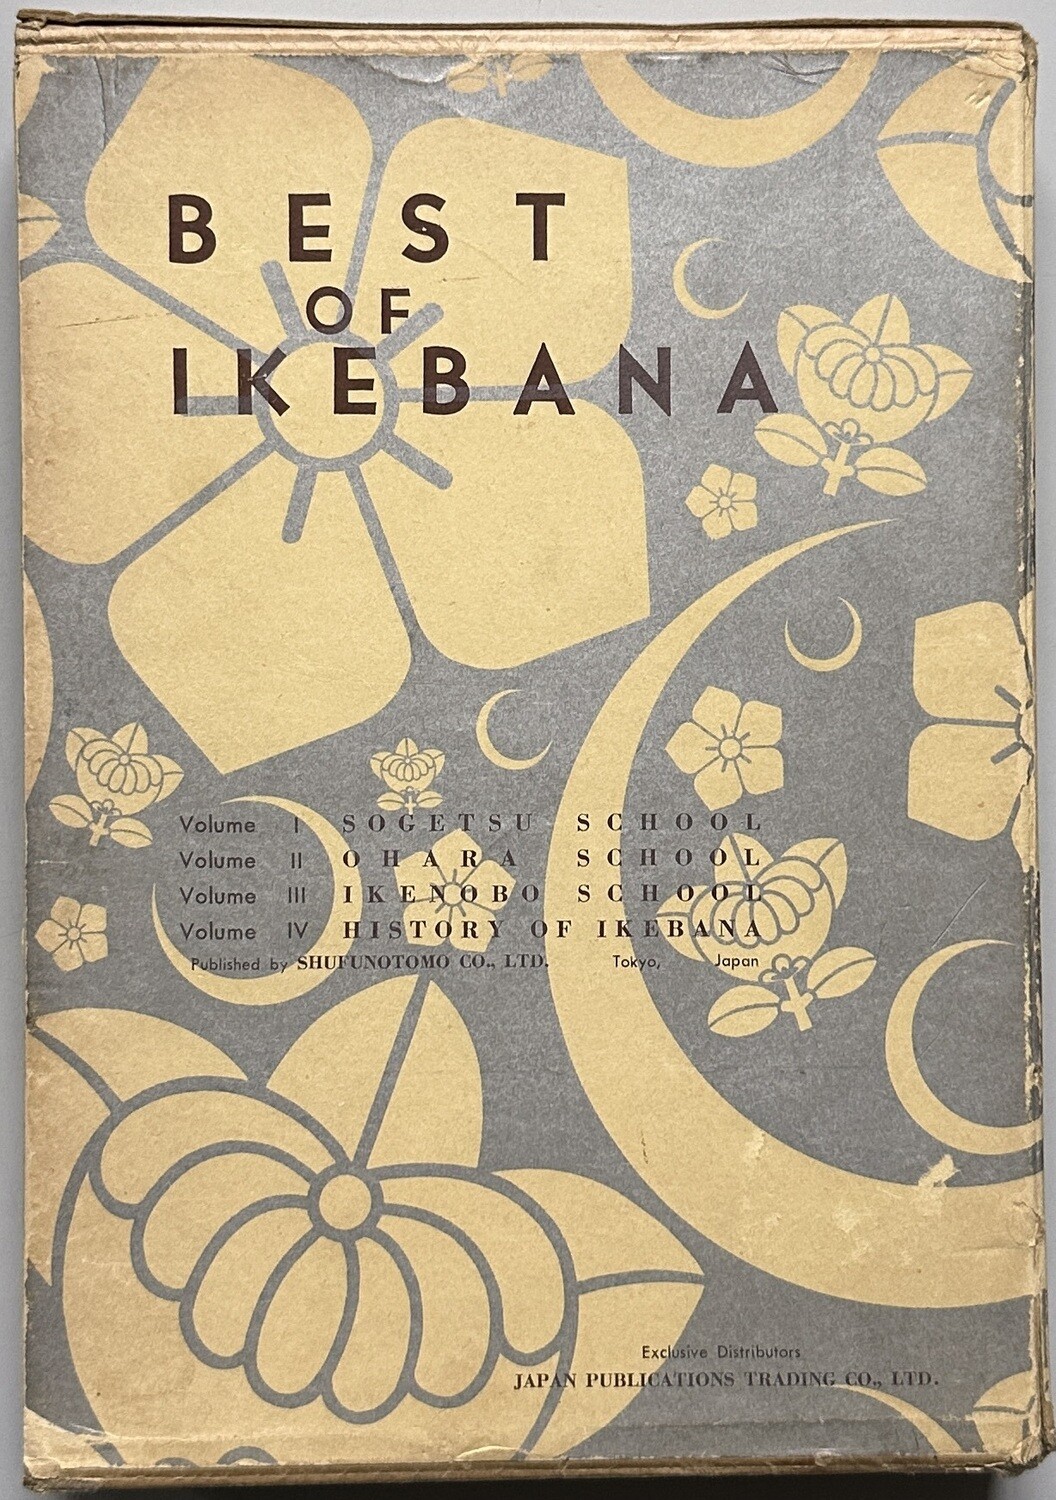 The Best of Ikebana